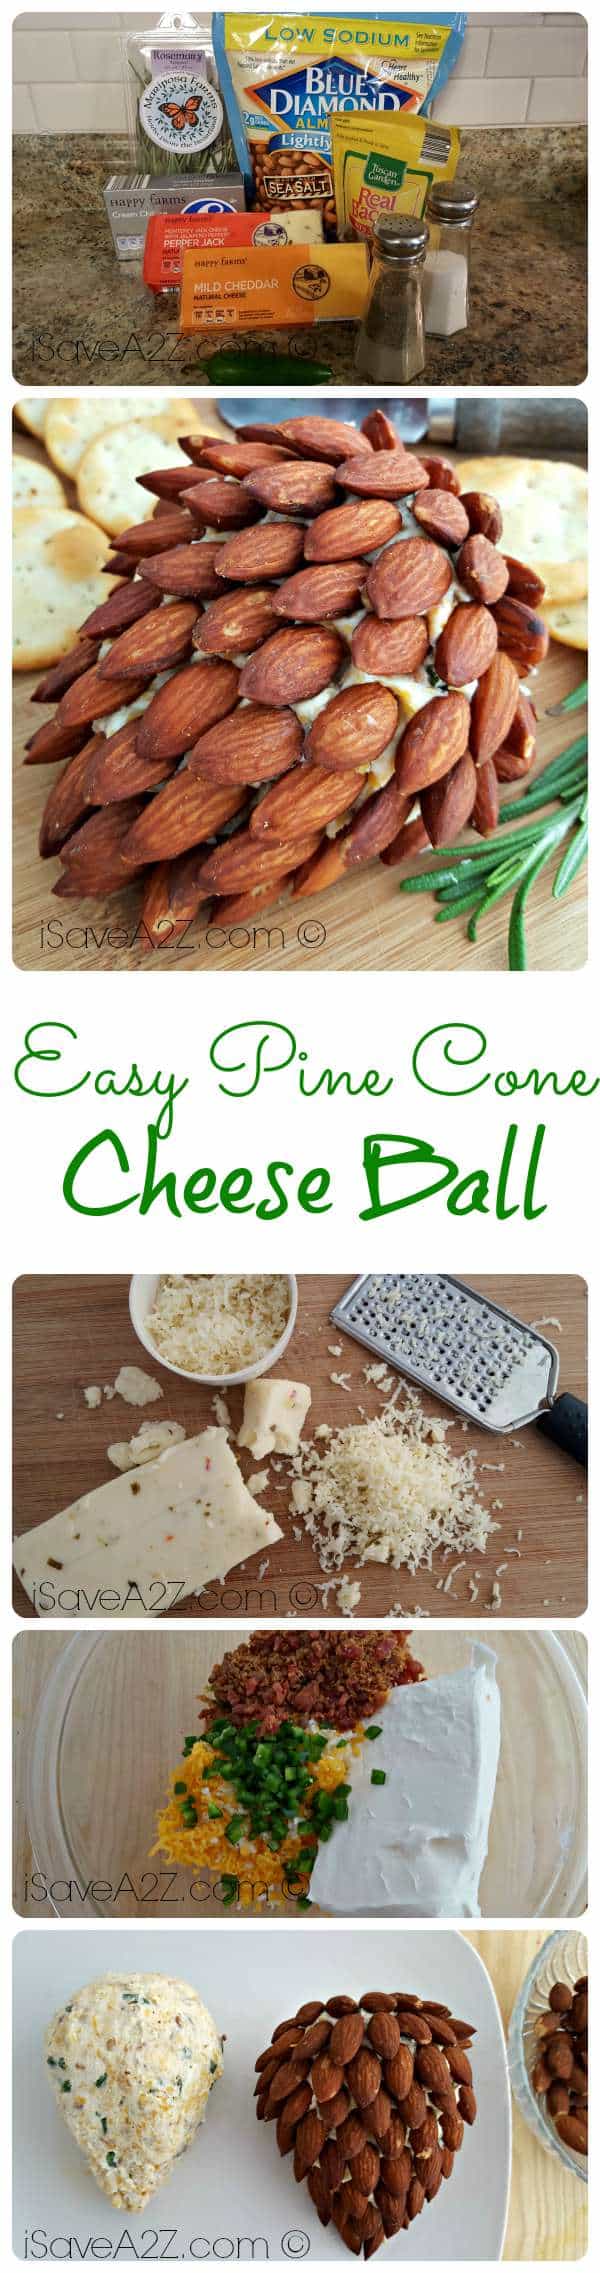 Easy Pine Cone Cheese Ball